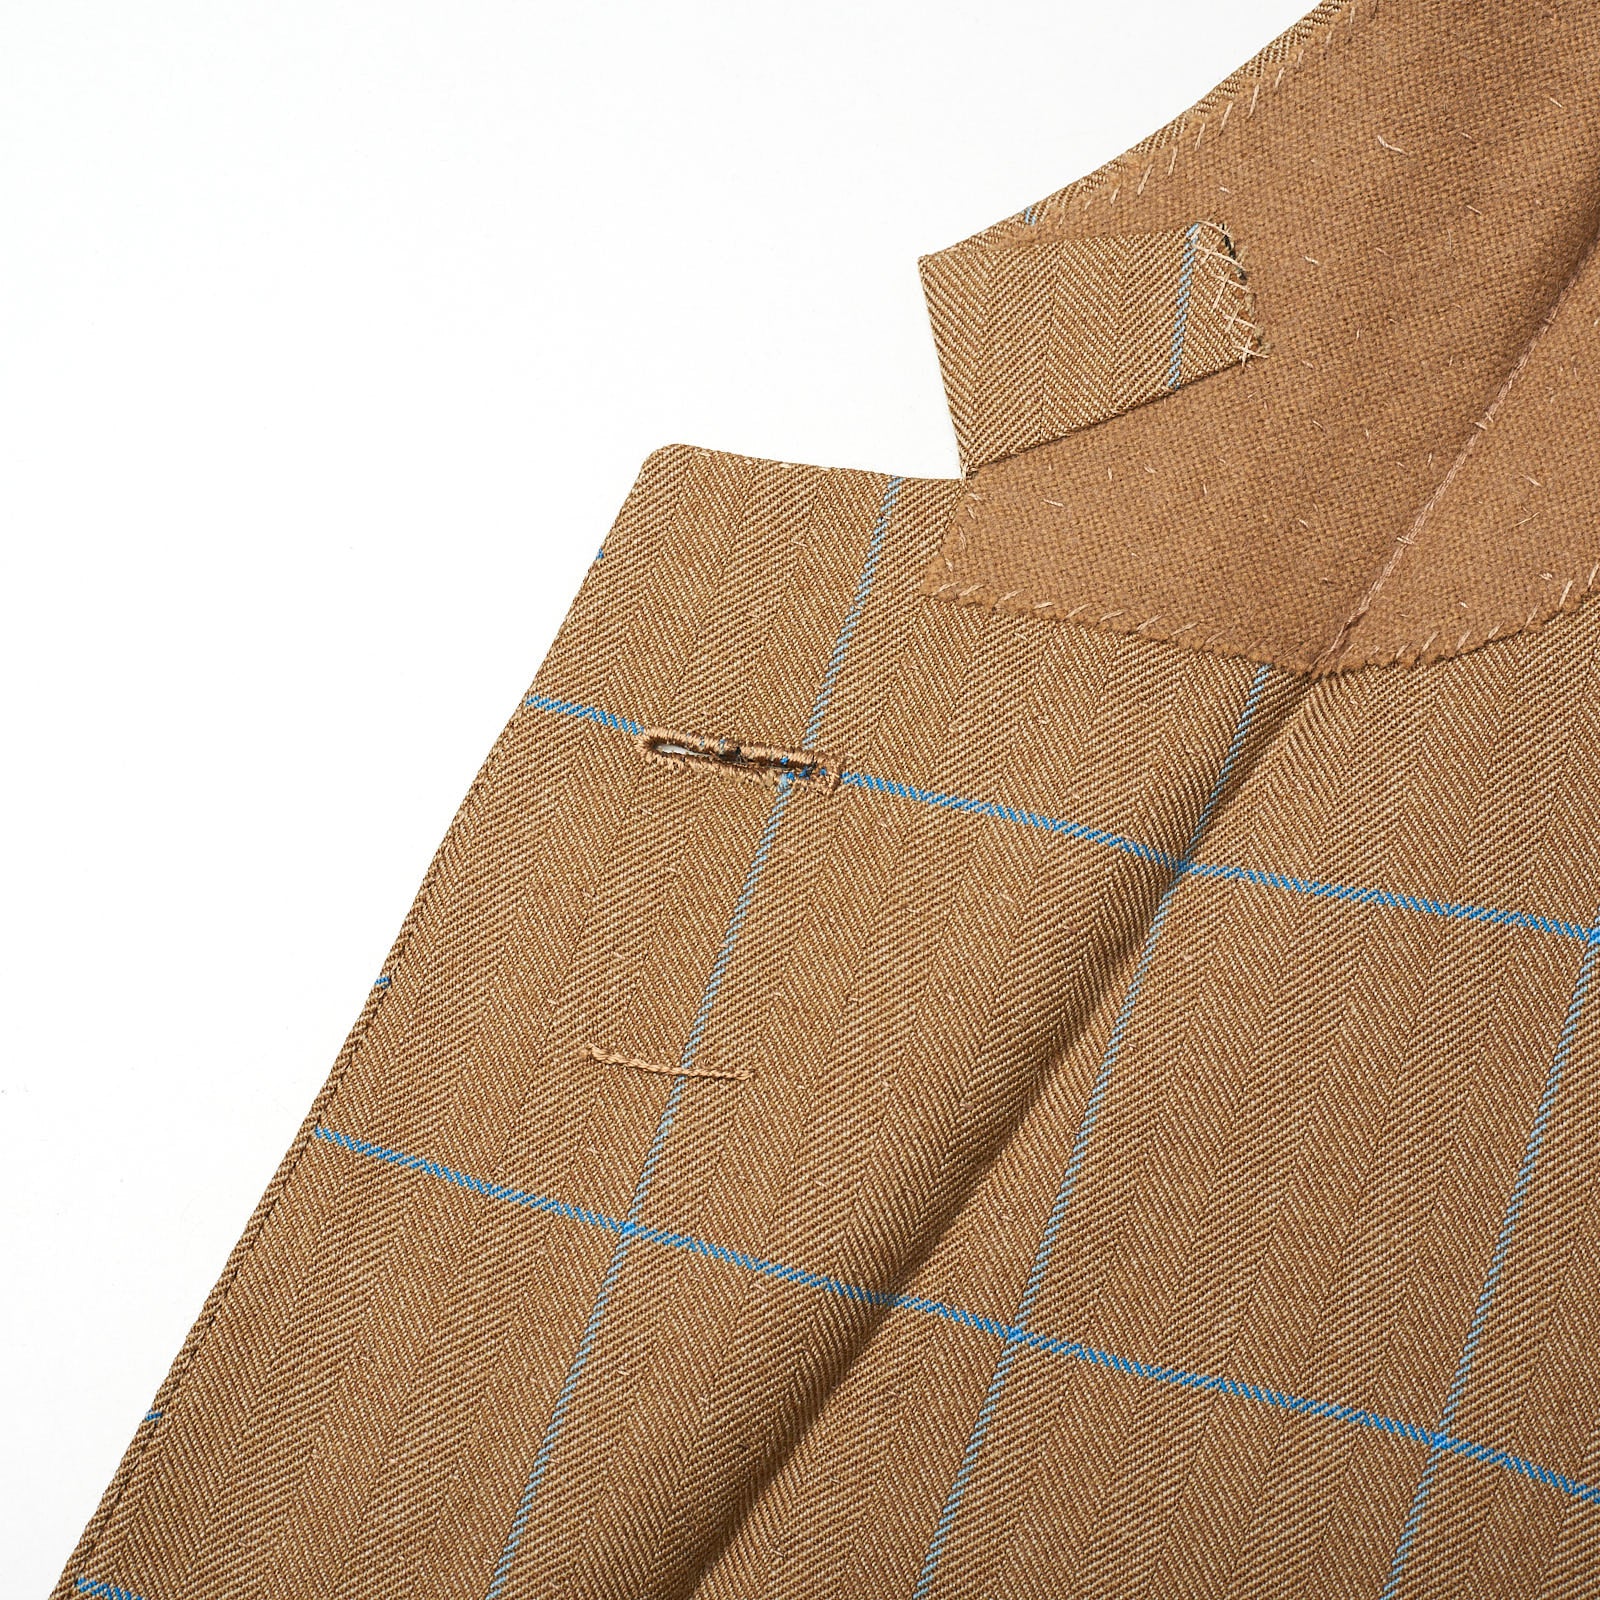 HUNTSMAN Savile Row Bespoke Tan Herringbone Plaid Wool 1 Button Jacket NEW US 40 HUNTSMAN